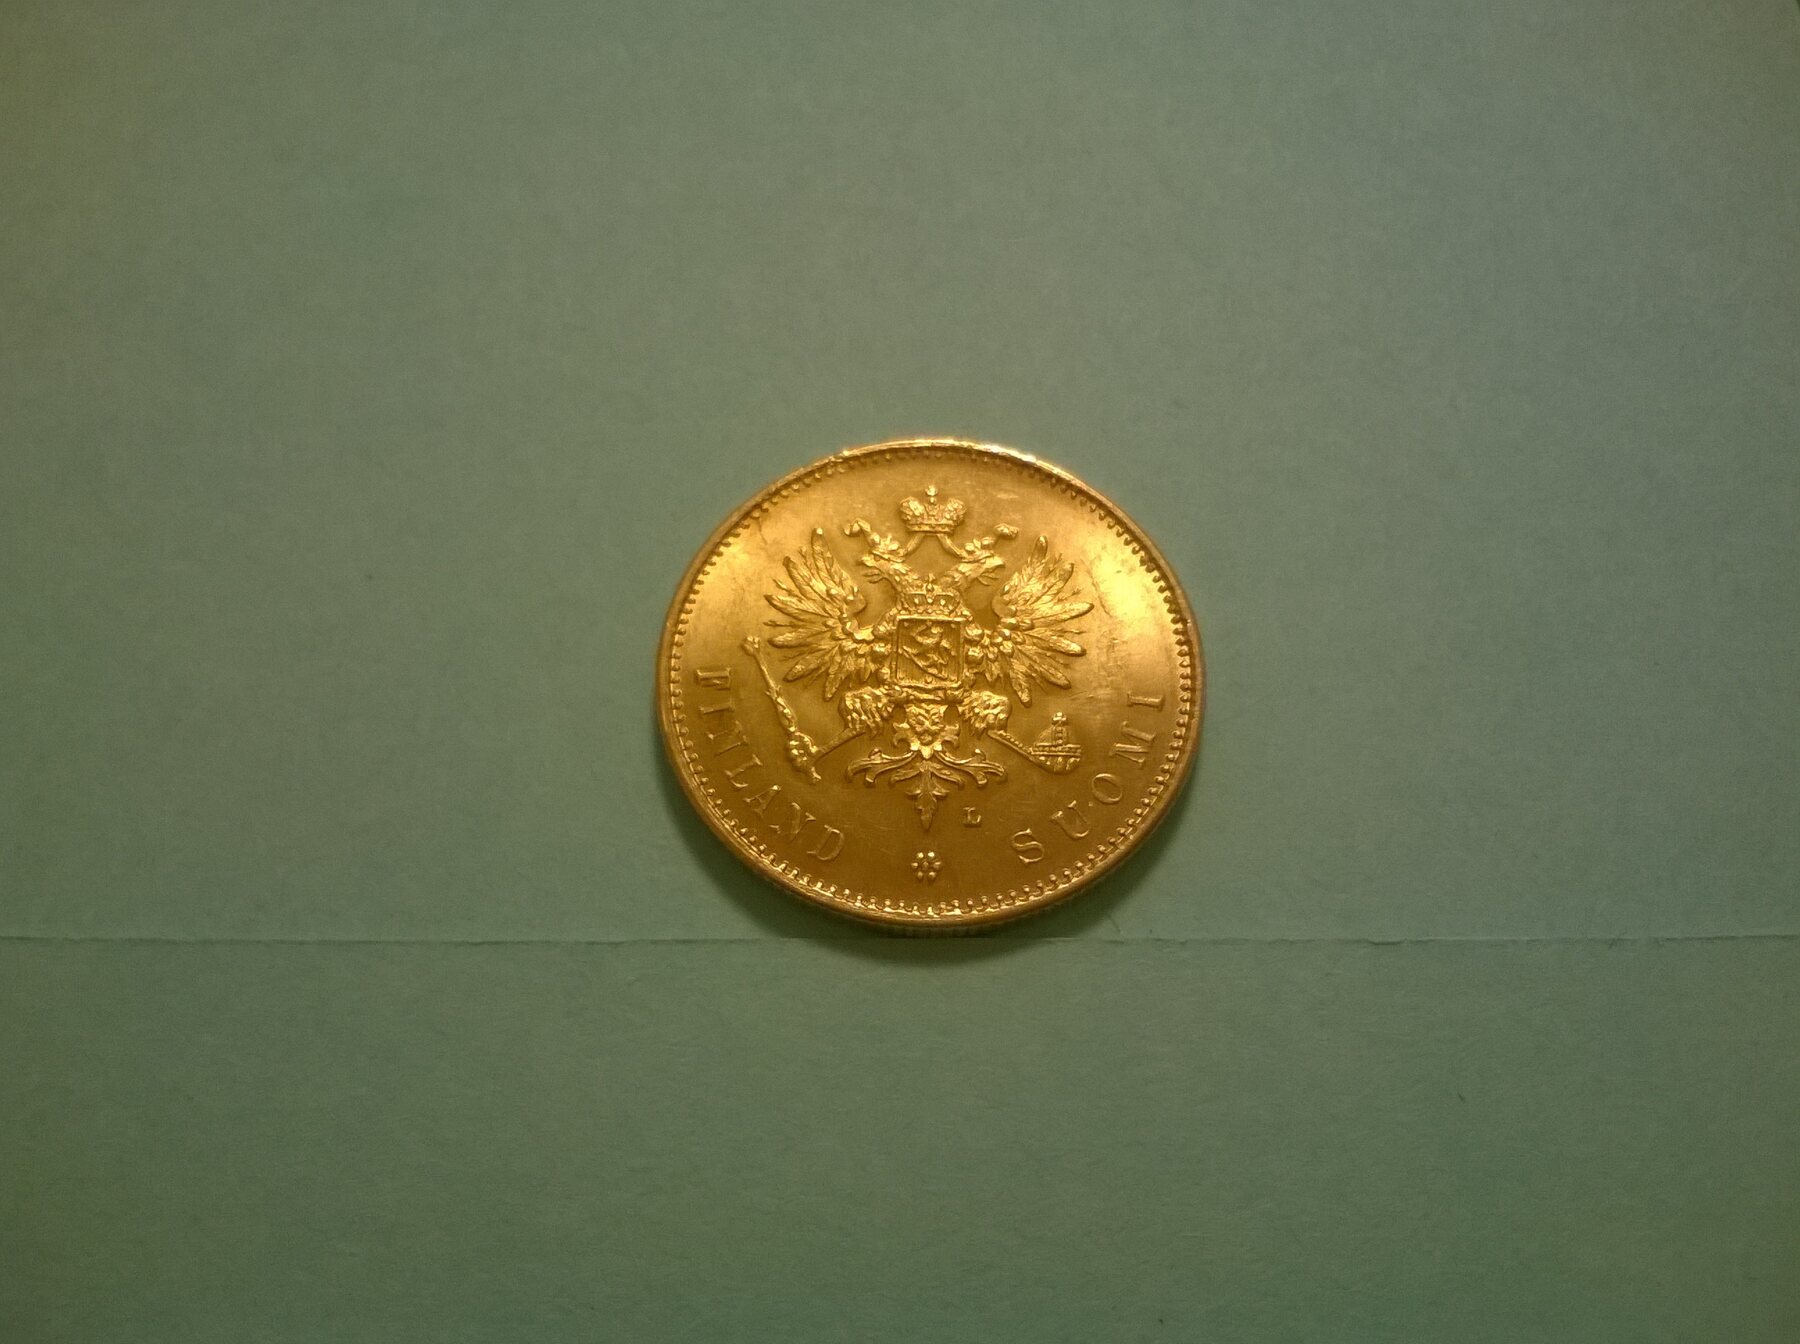 Finland Finnland Finnish gold coin 20 markkaa 1904 quite rare year